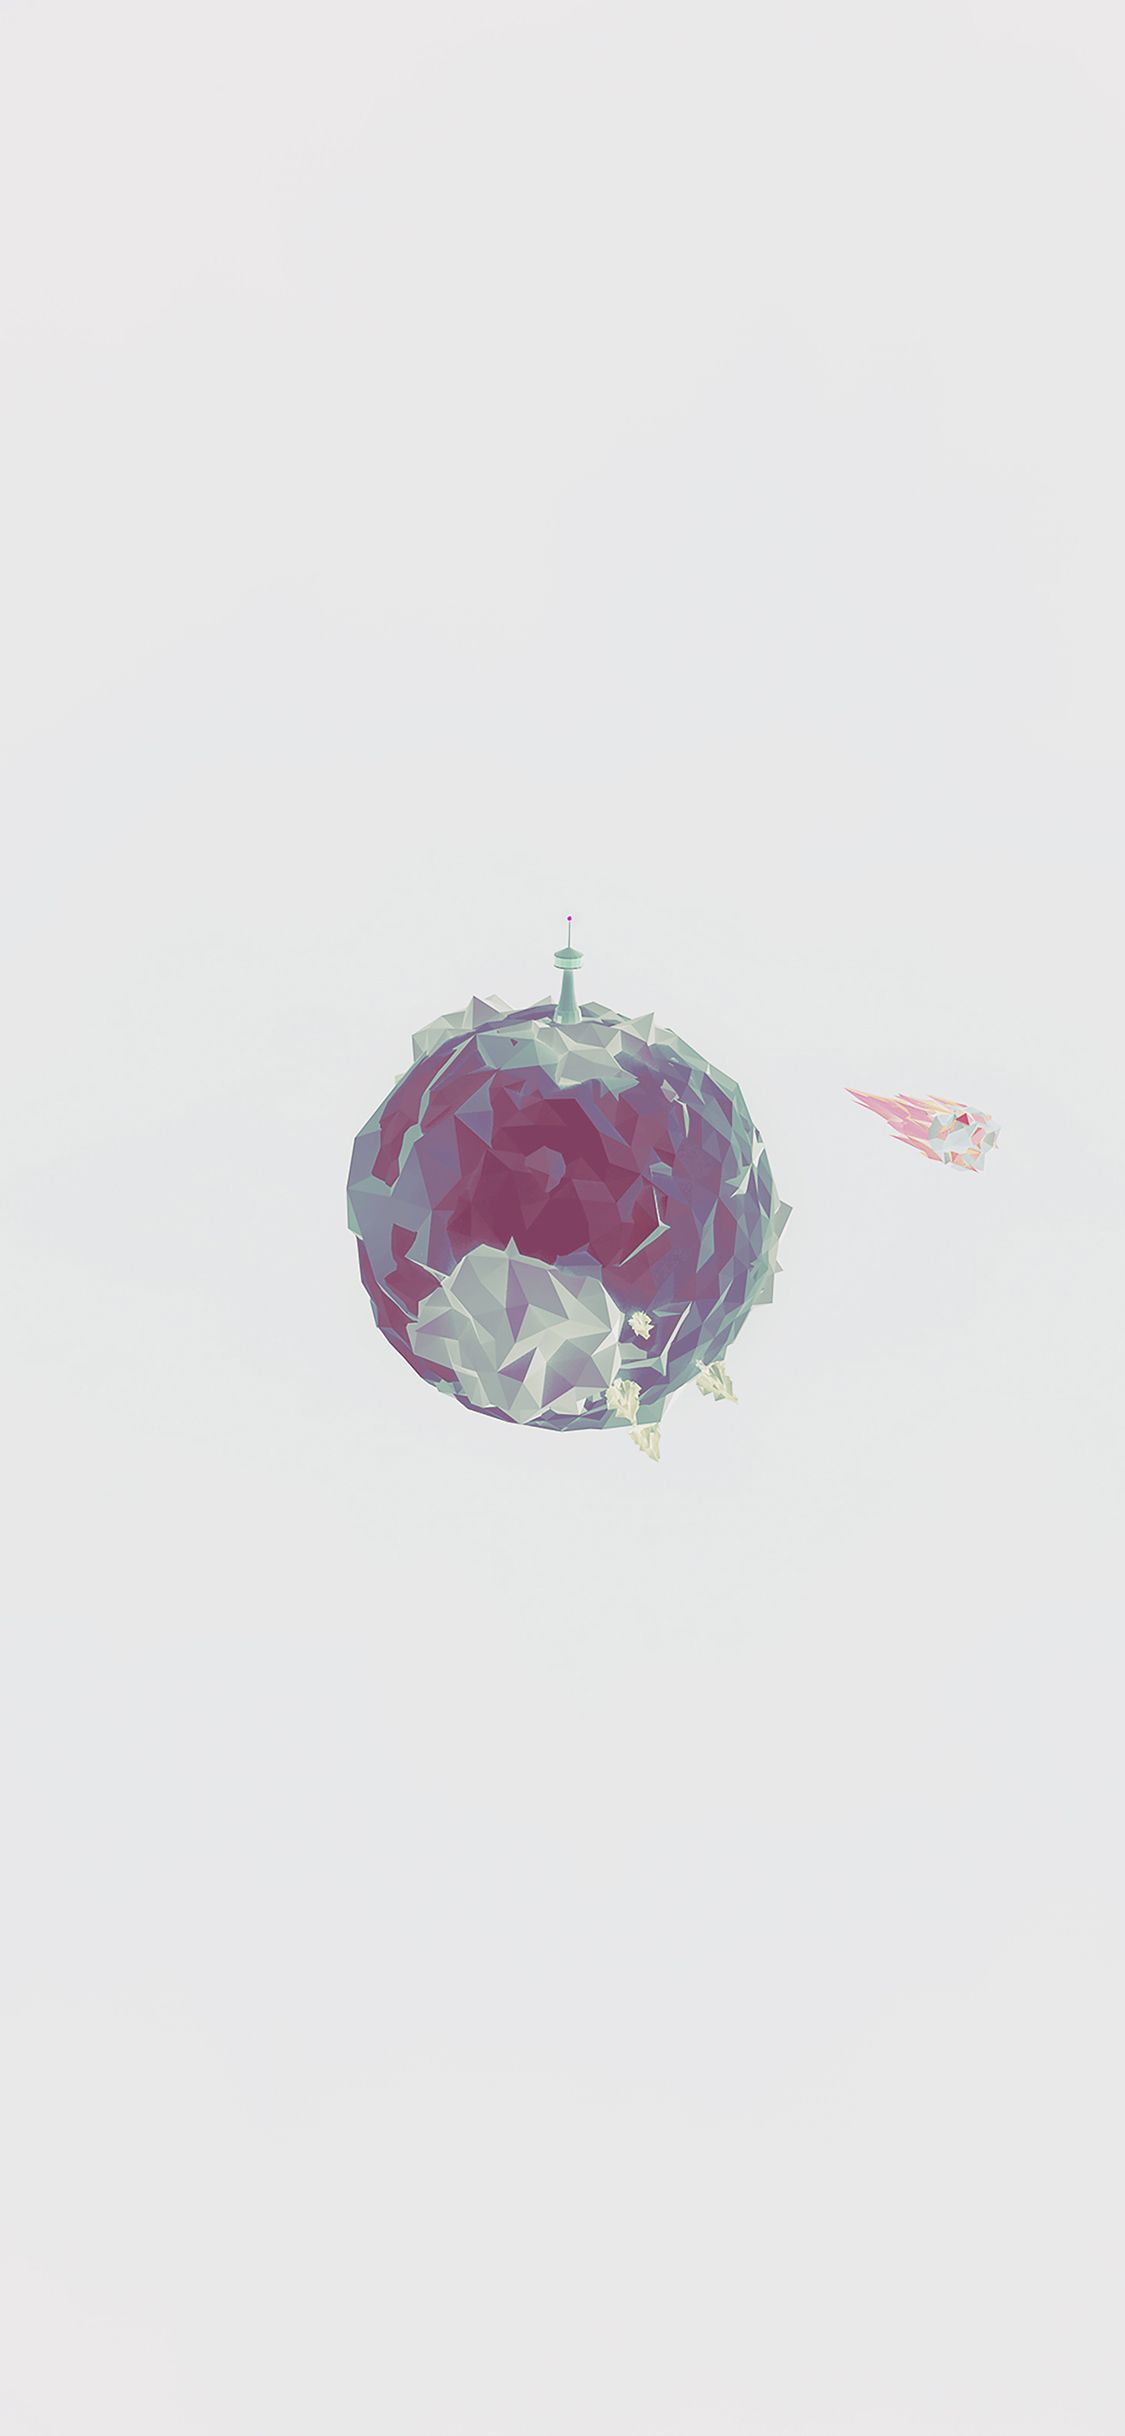 Polygon Planet Cute Minimal Simple Art iPhone X Wallpaper Free Download